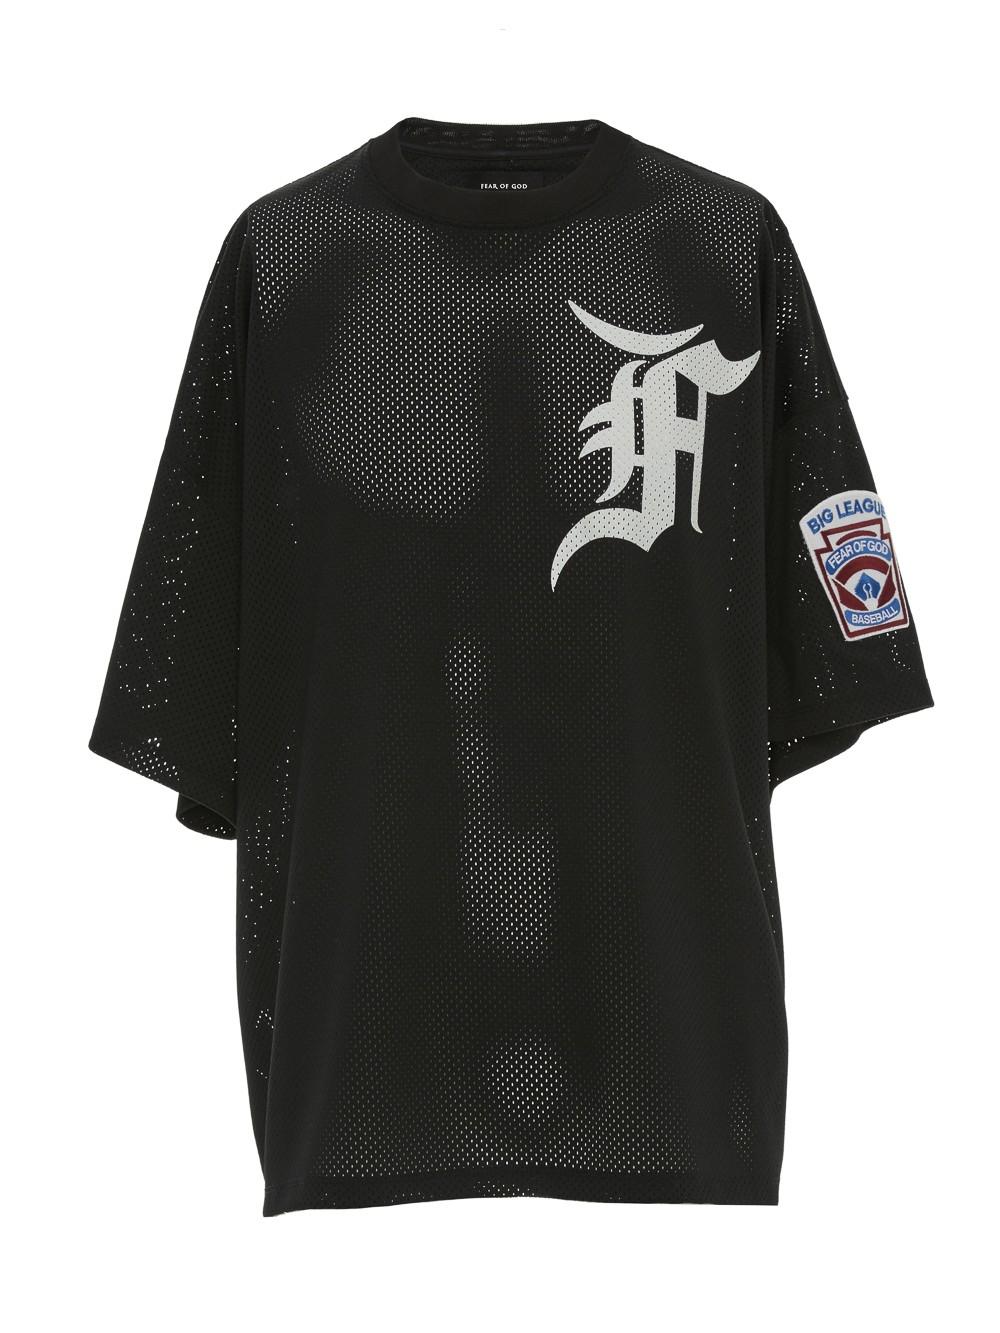 Fear of God Short-Sleeve Graphic Mesh Batting Practice Baseball Jersey T-Shirt